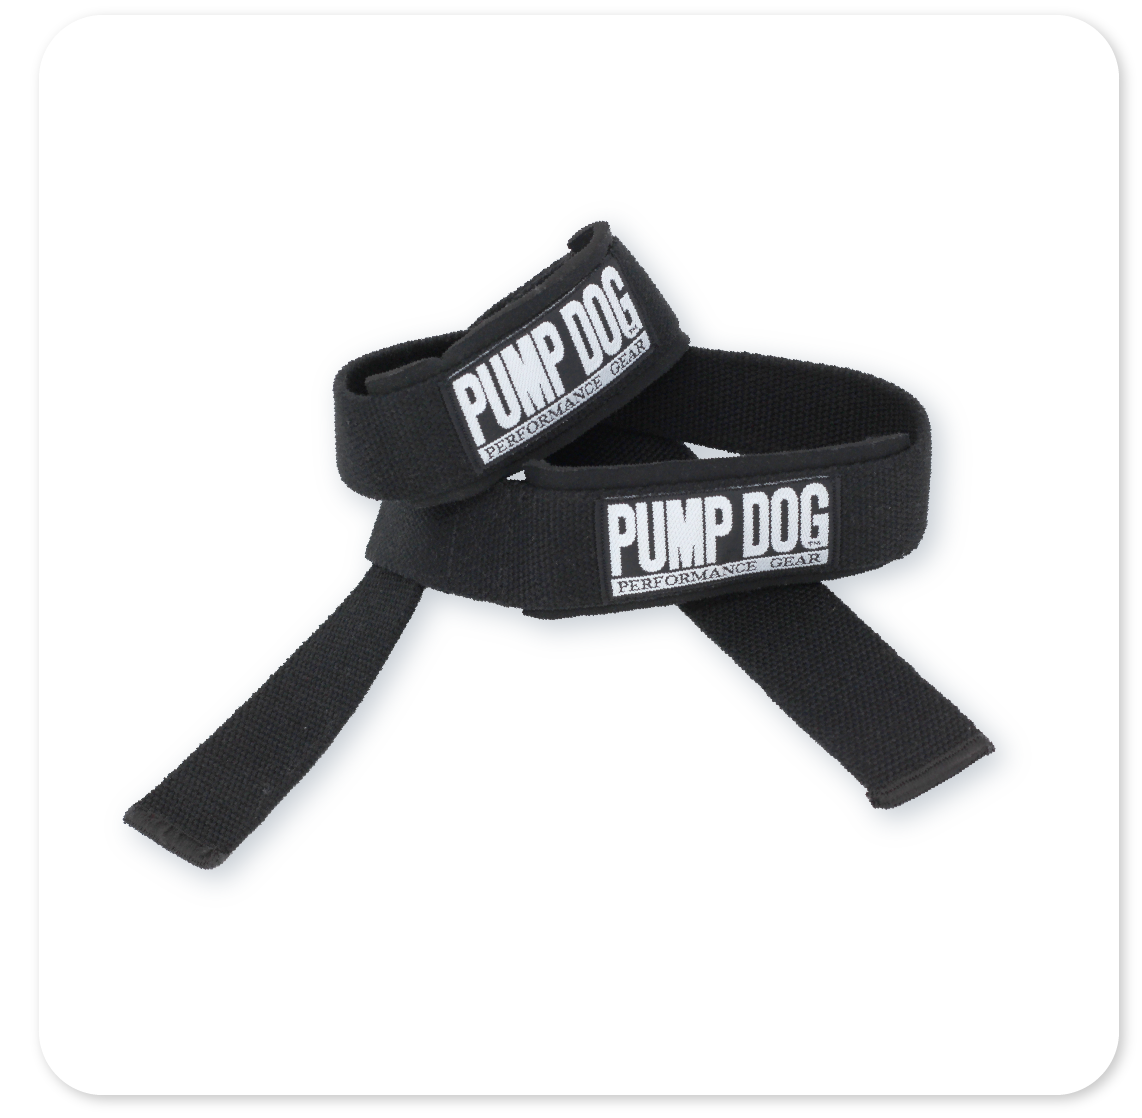 Pump Dog Super Heavy-Duty Lifting Straps - BOGO Buy1 Get 1